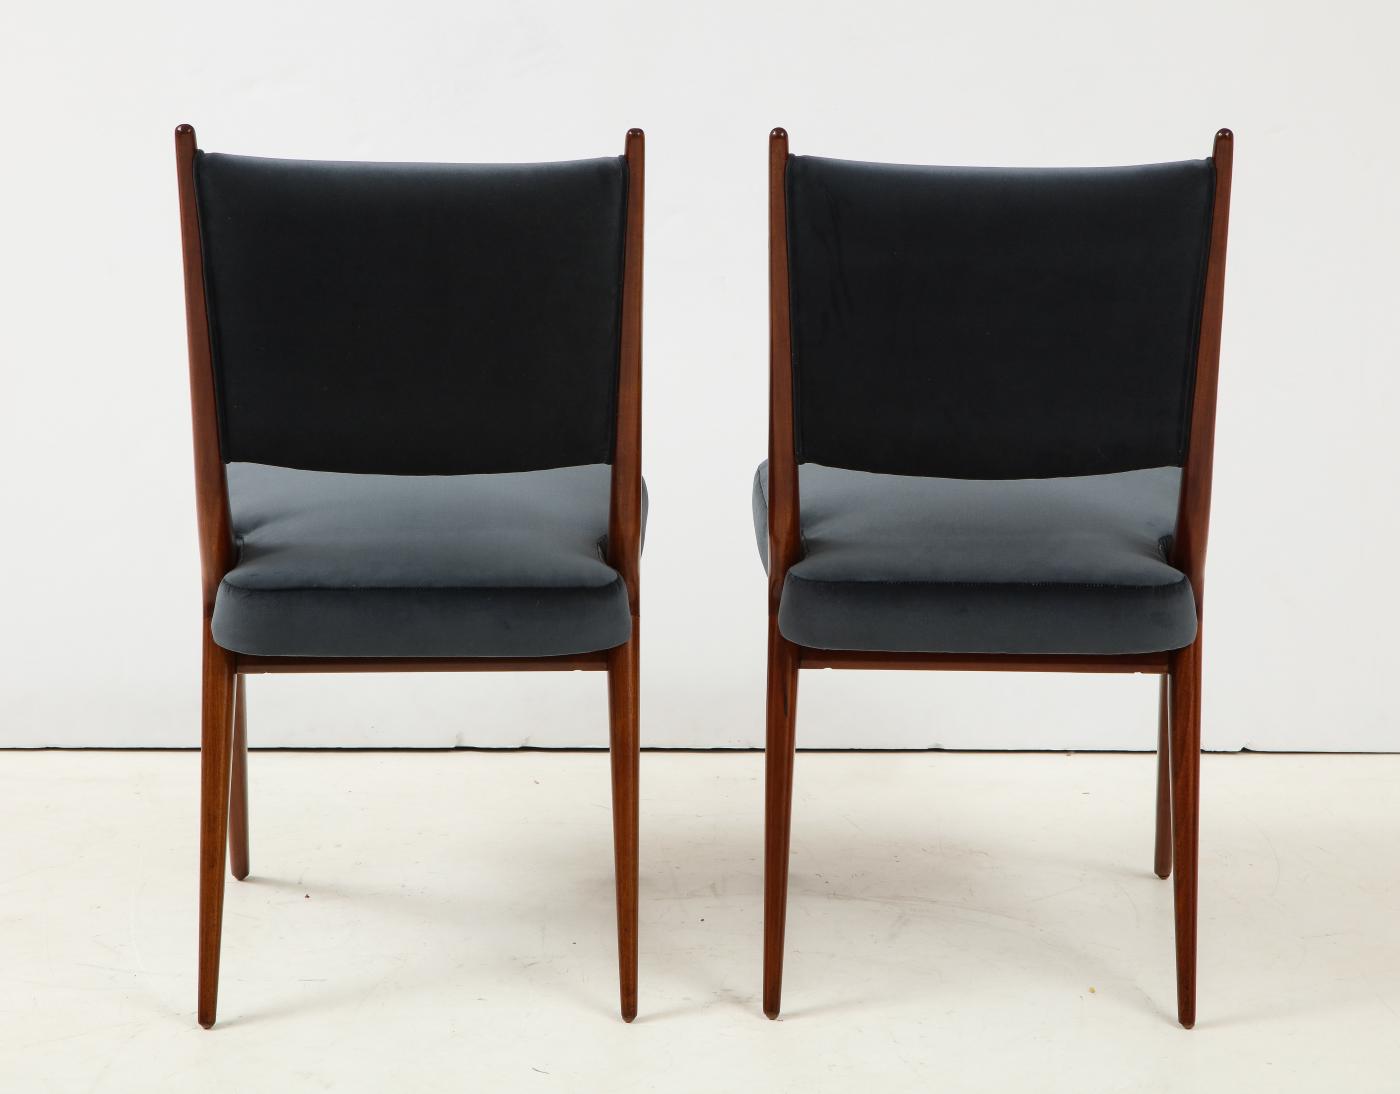 A set of Six mid century modern dining chairs. Solid Italian Walnut.